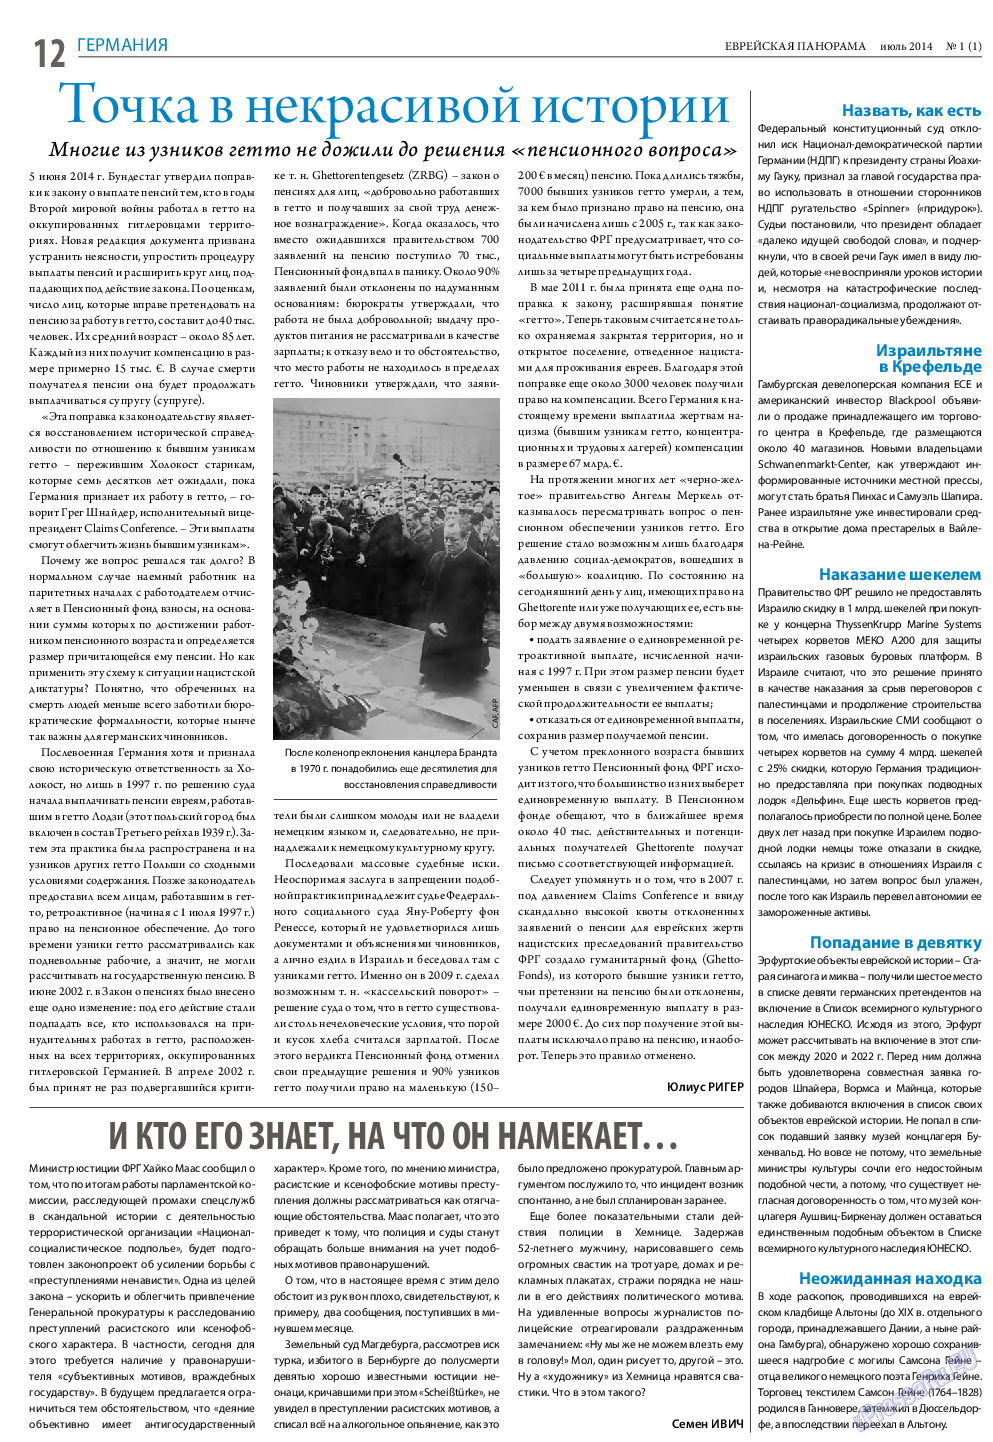 Еврейская панорама, газета. 2014 №1 стр.12